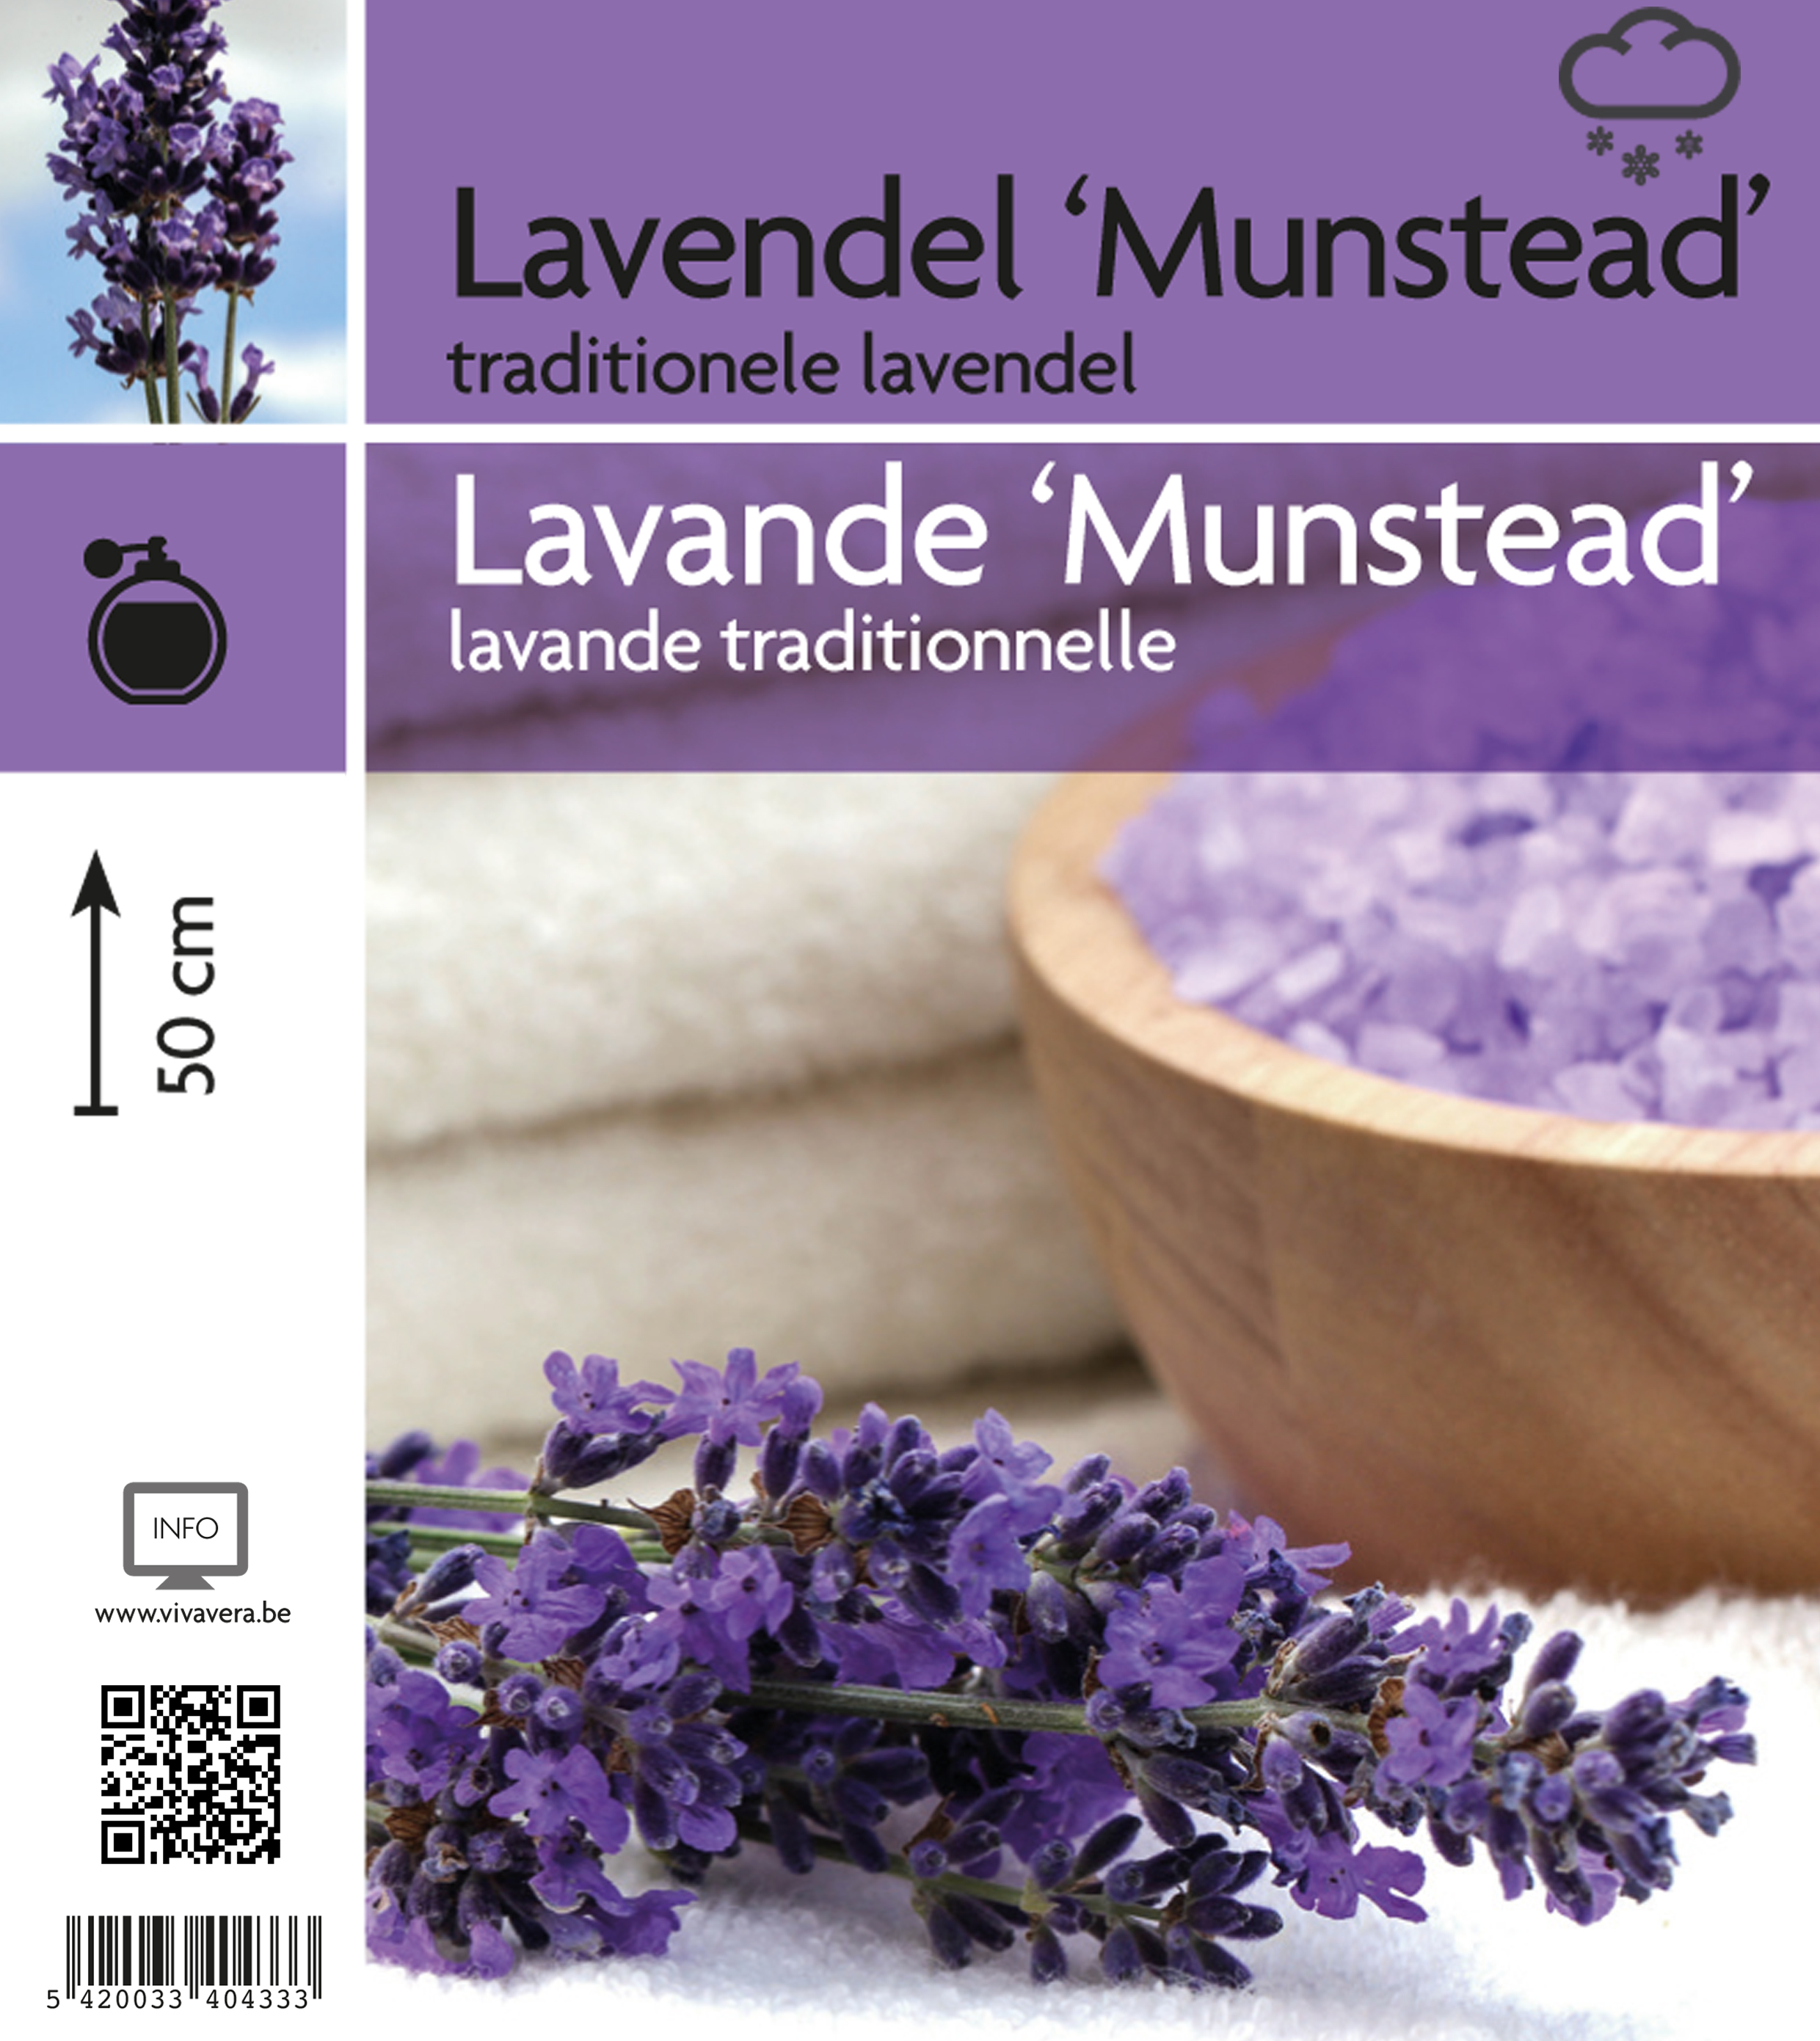 Lavendel 'Munstead' (tray 15 pot)